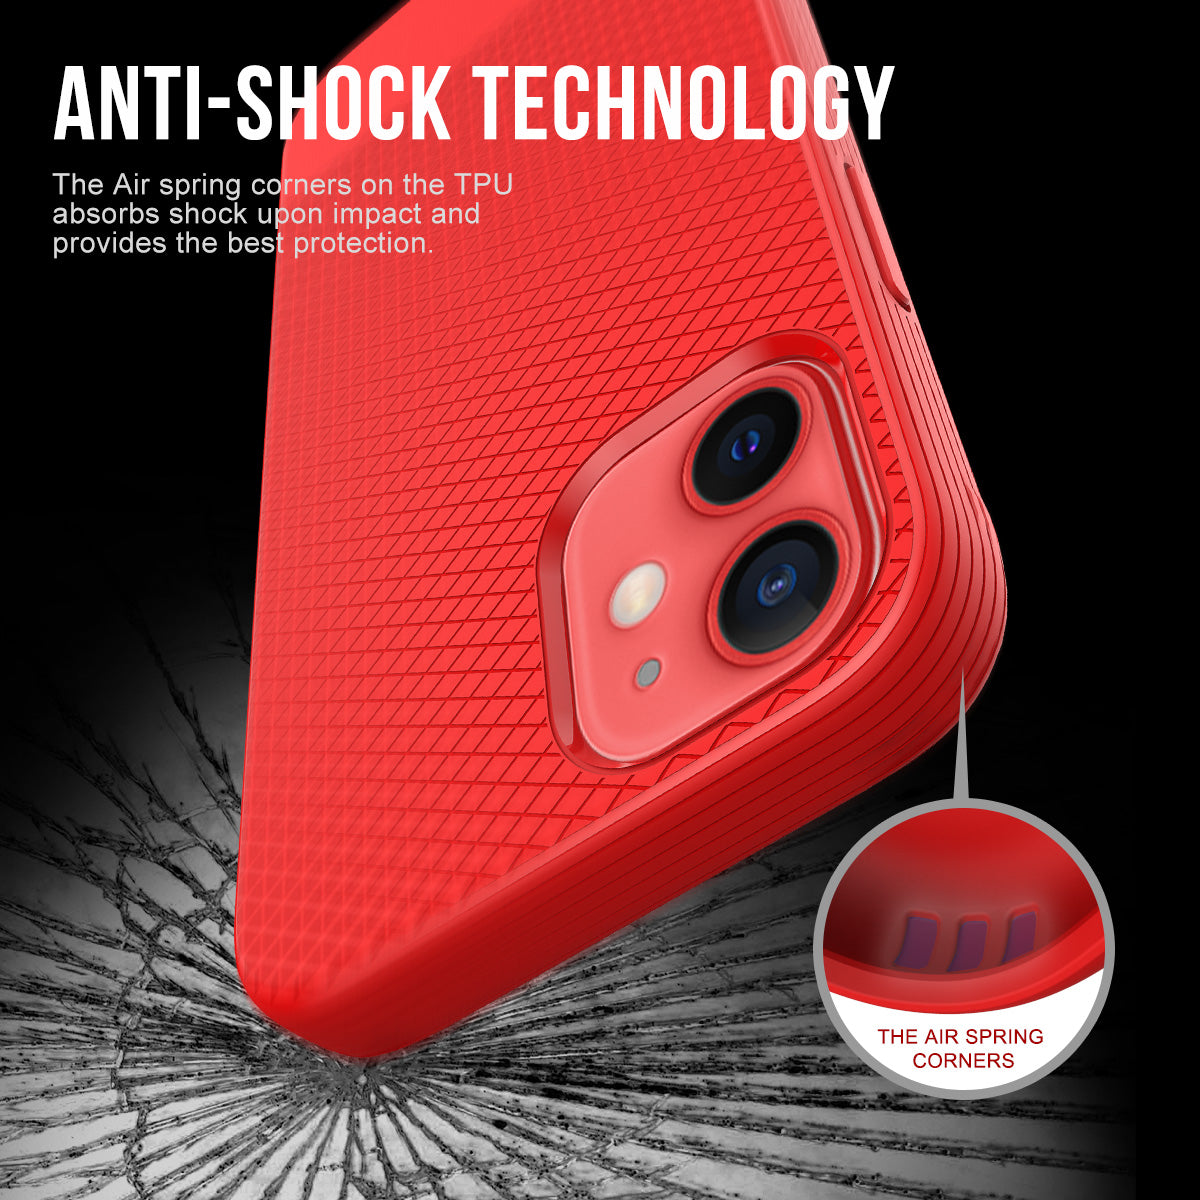 ZEOS Flexx Case for iPhone 12 Pro Max